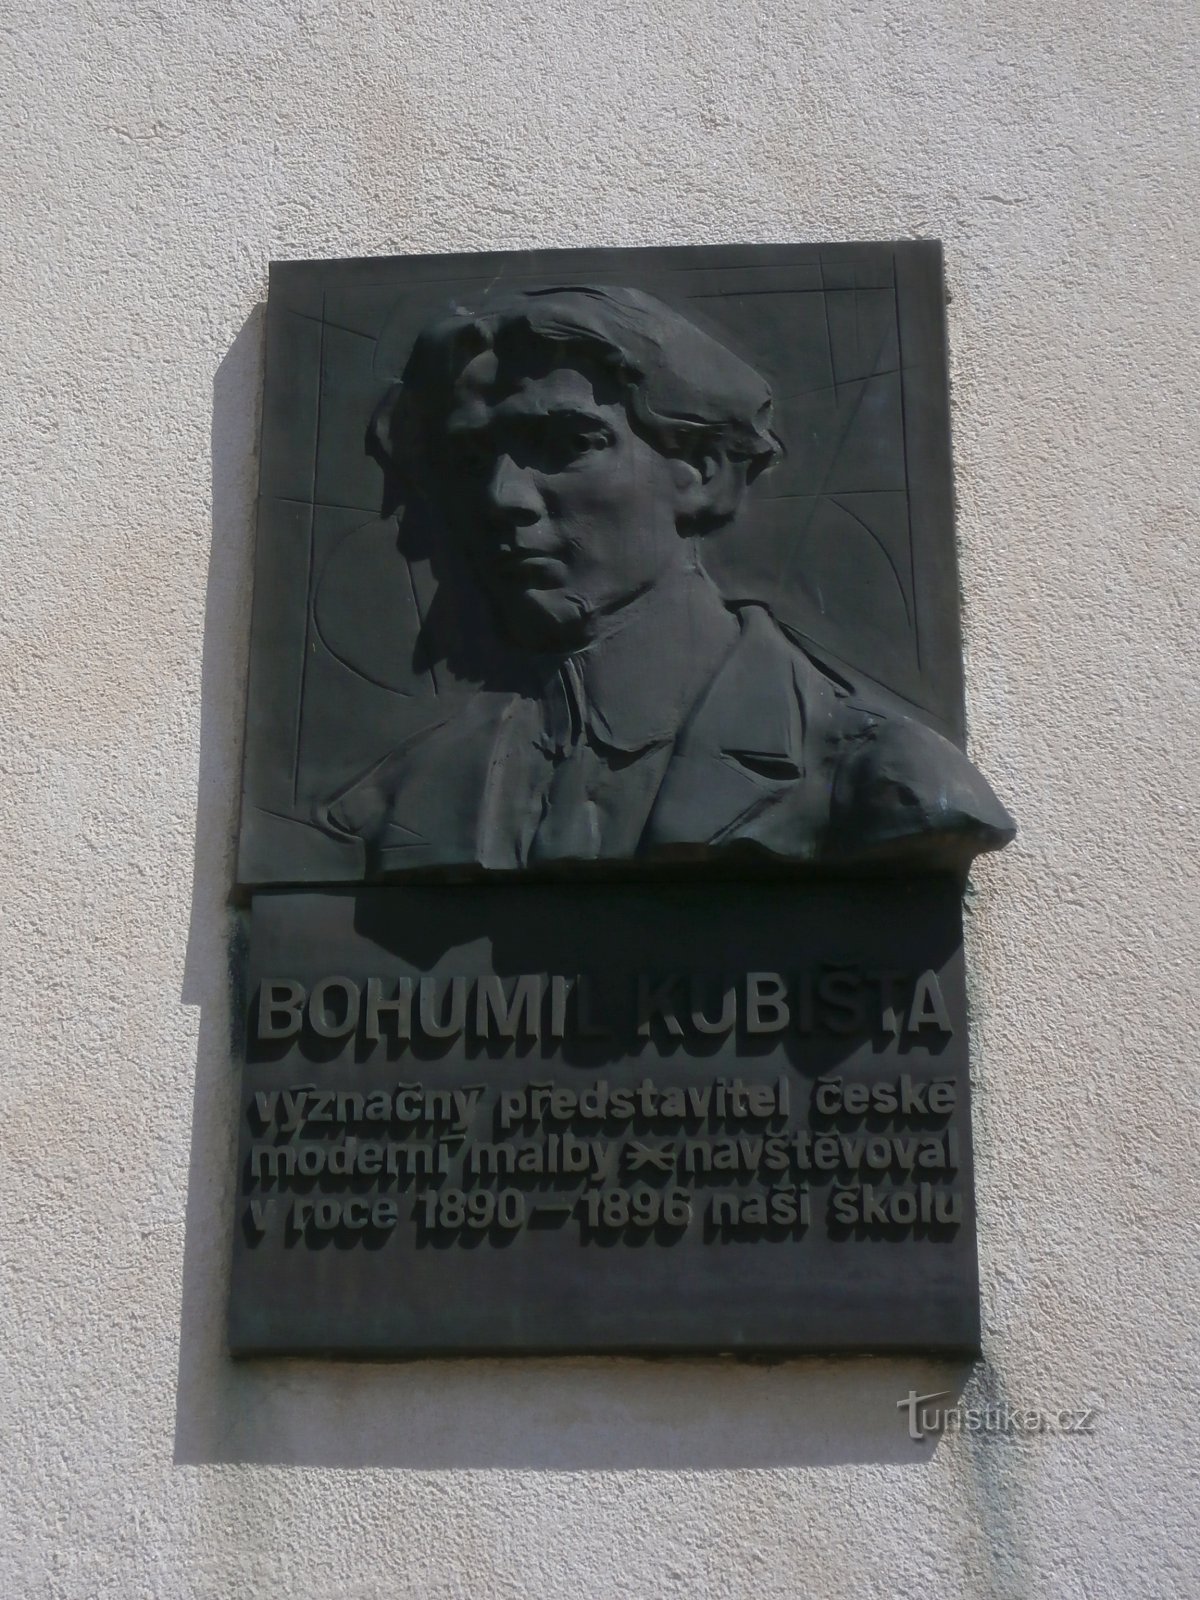 Targa commemorativa a Bohumil Kubišt nella scuola di Praskačka